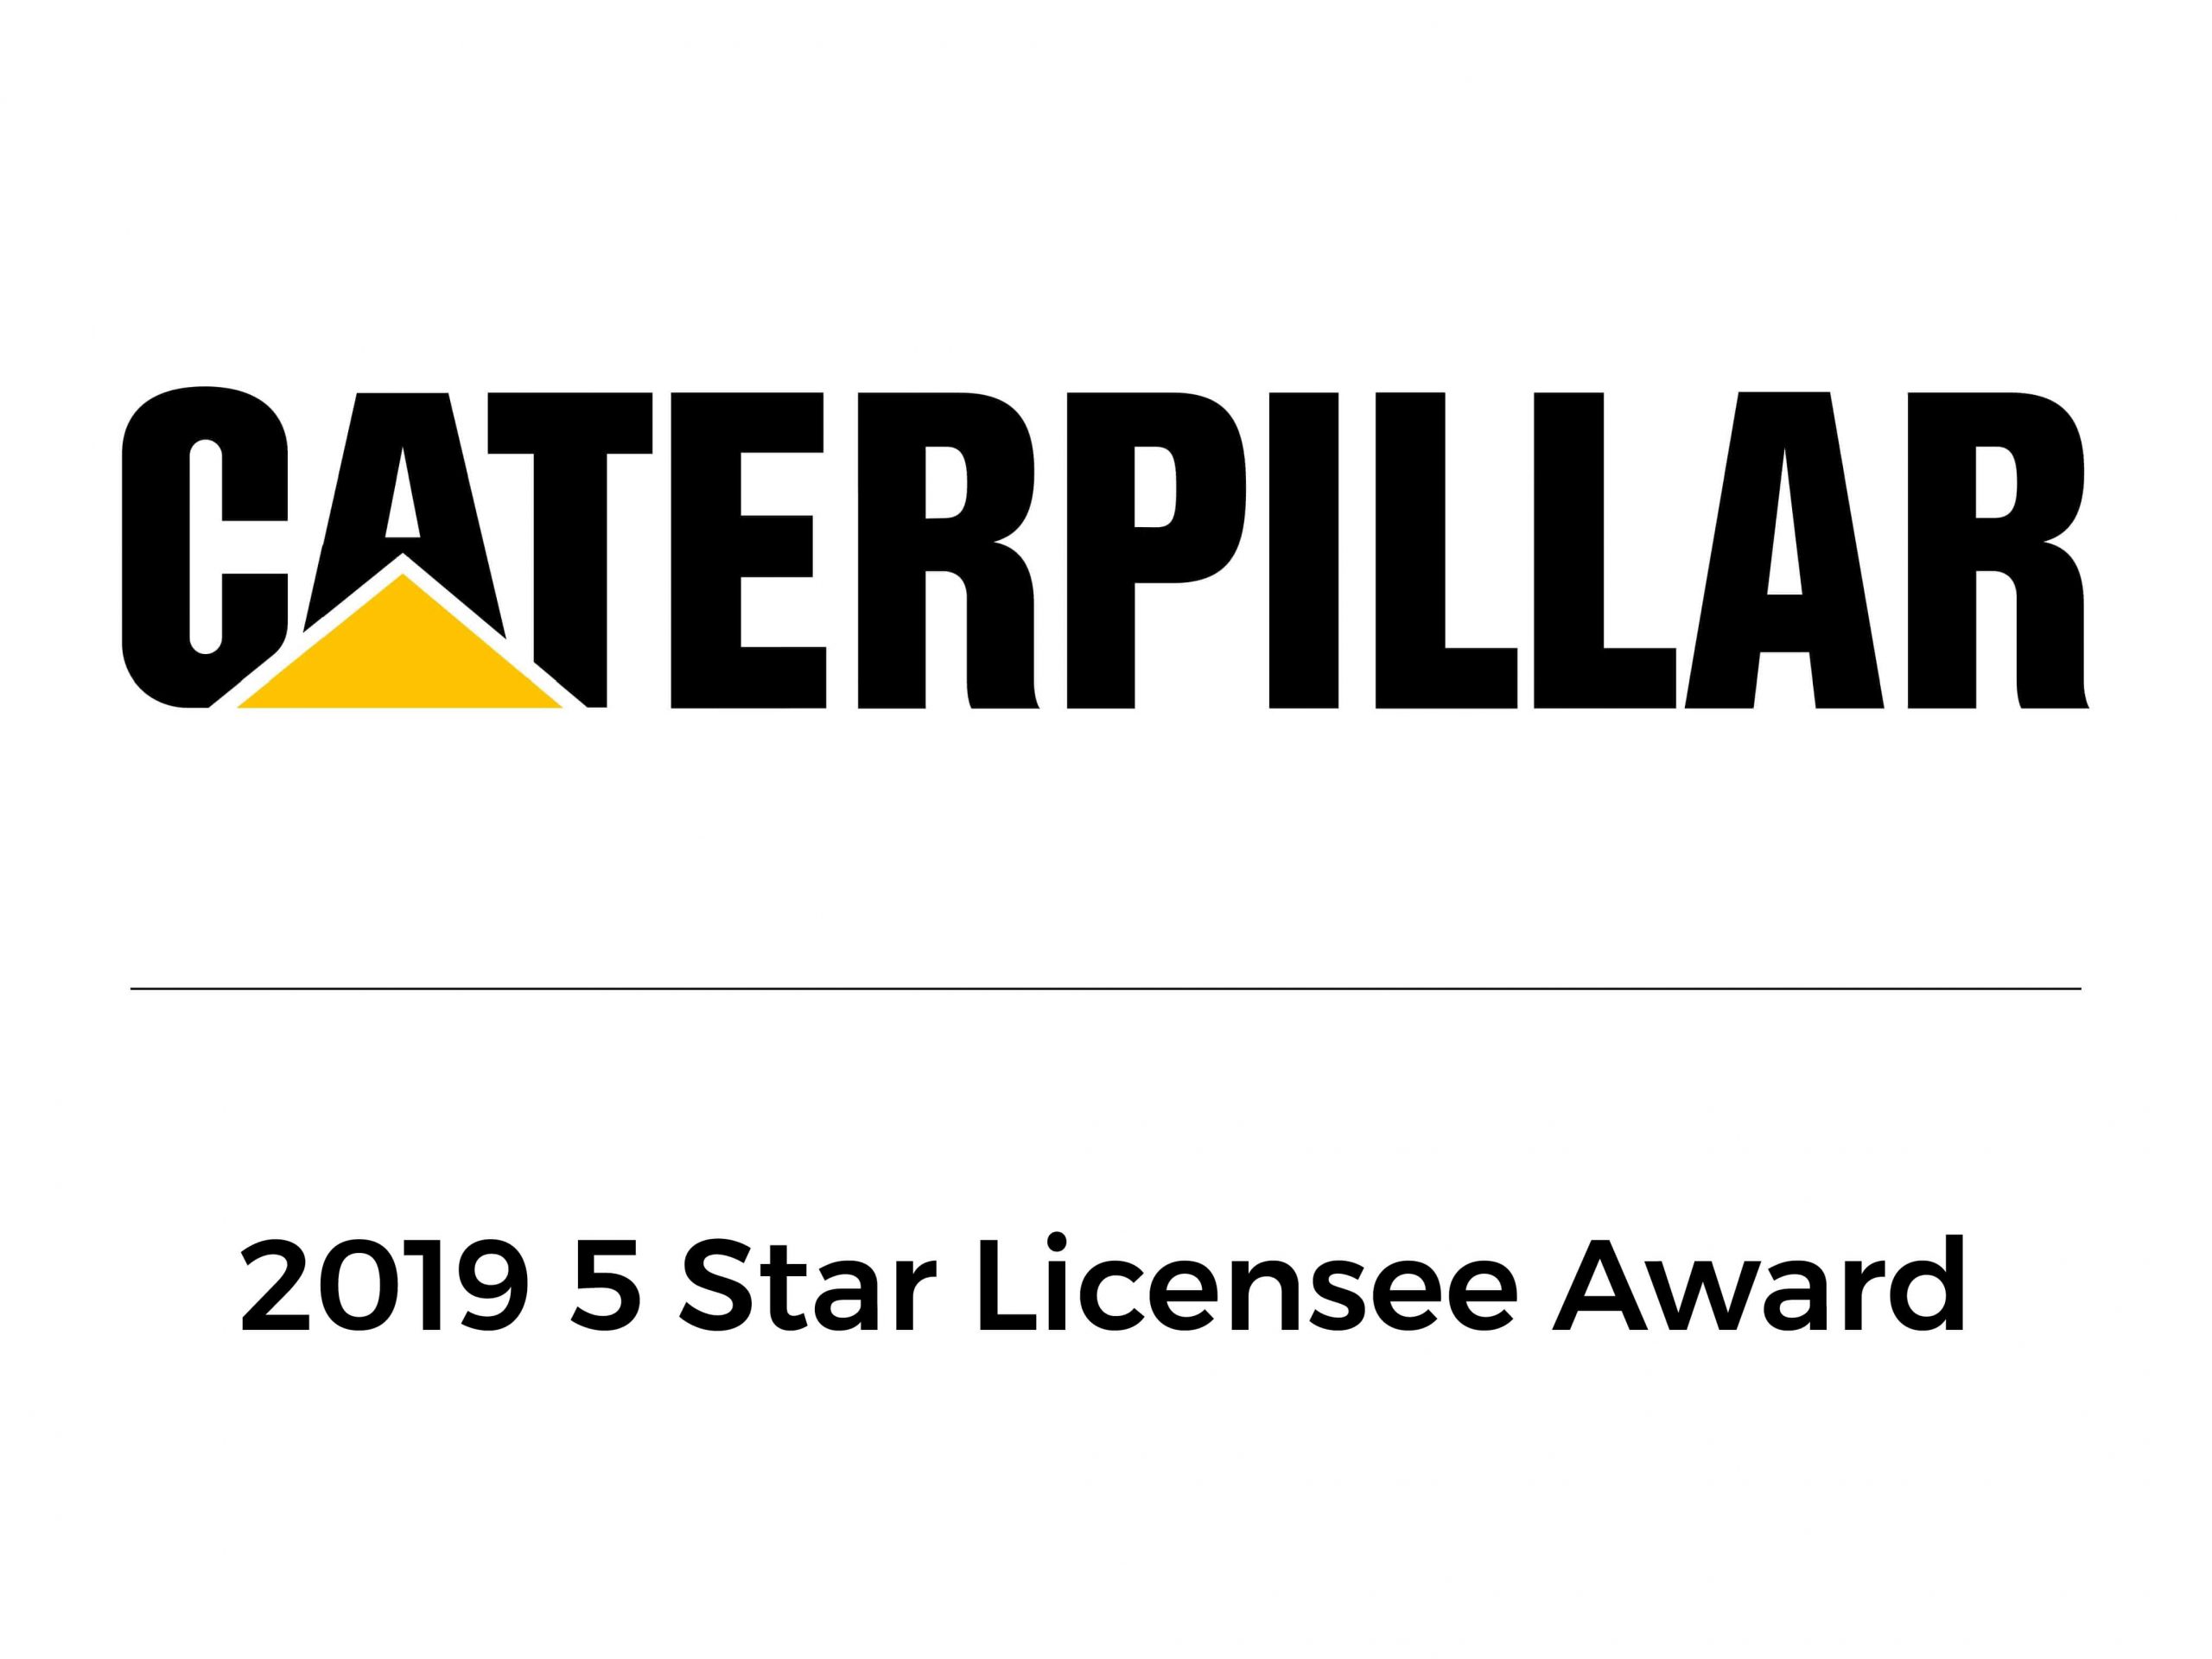 Caterpillar 2019 5 Star Licensee Award